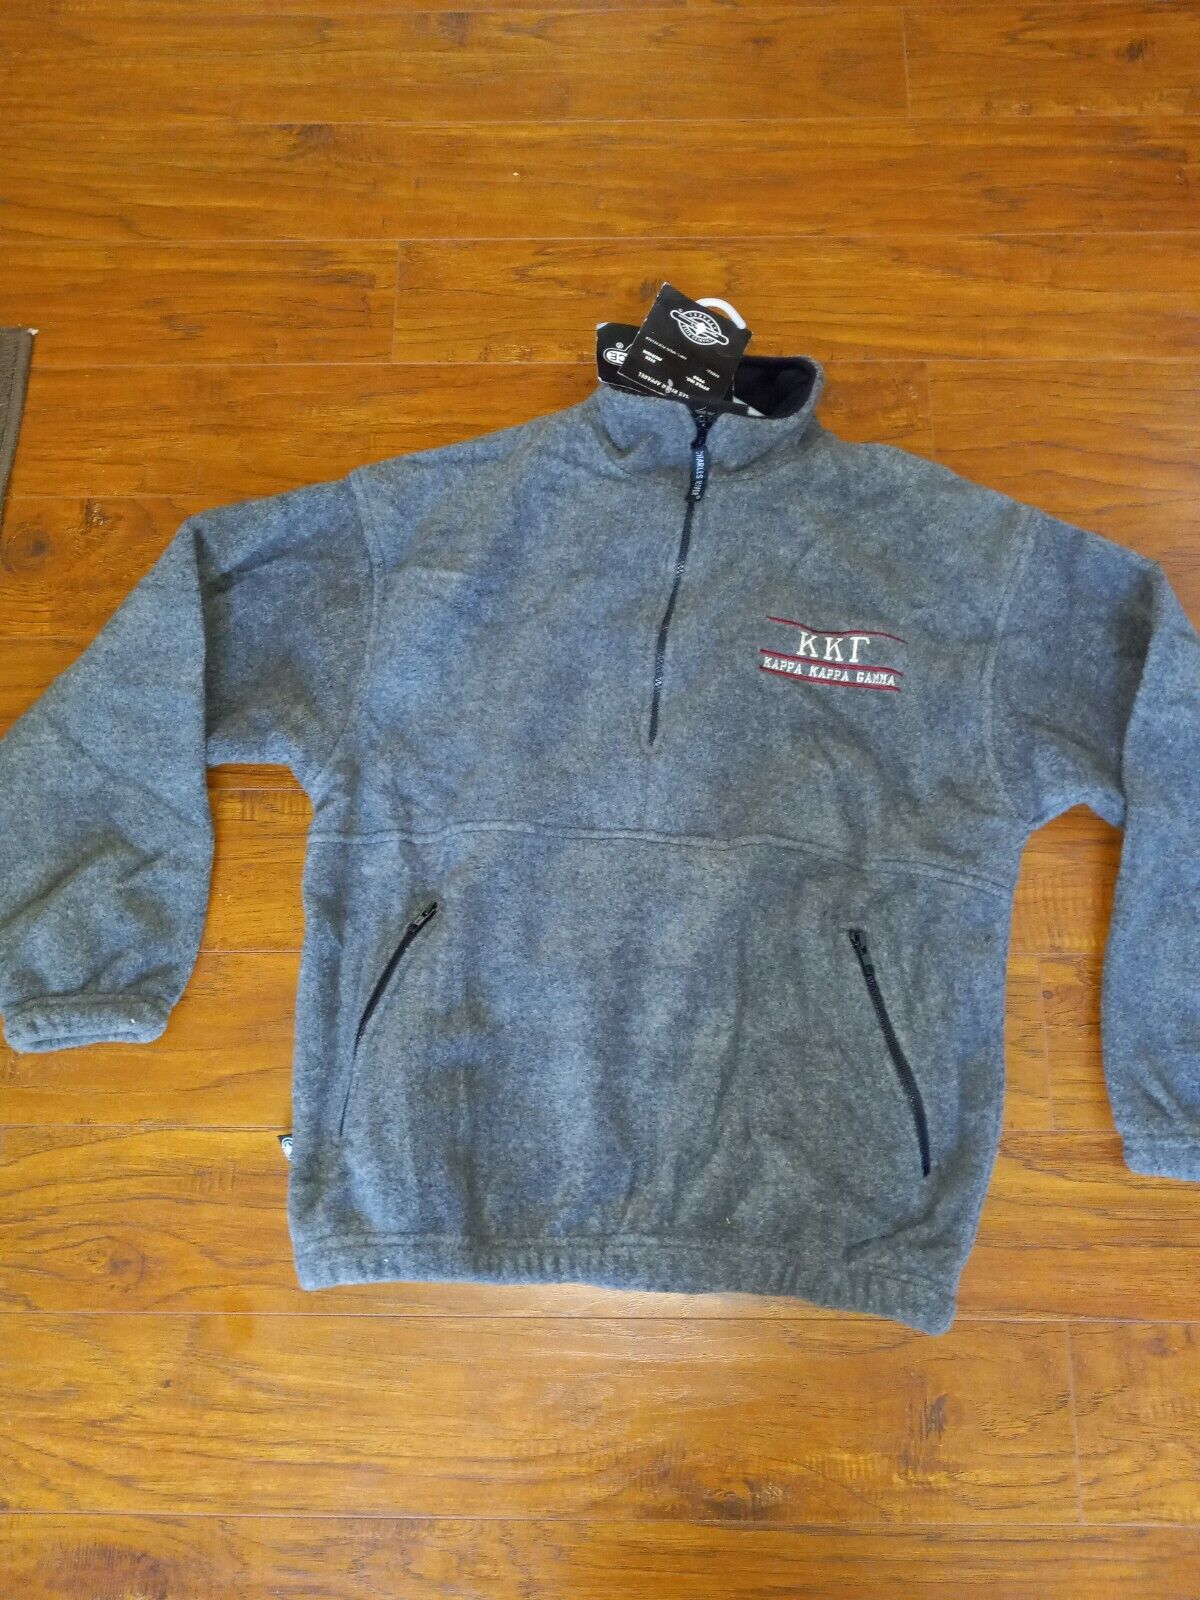 Kappa kappa Gamma Sweater Size Medium With Original Tags